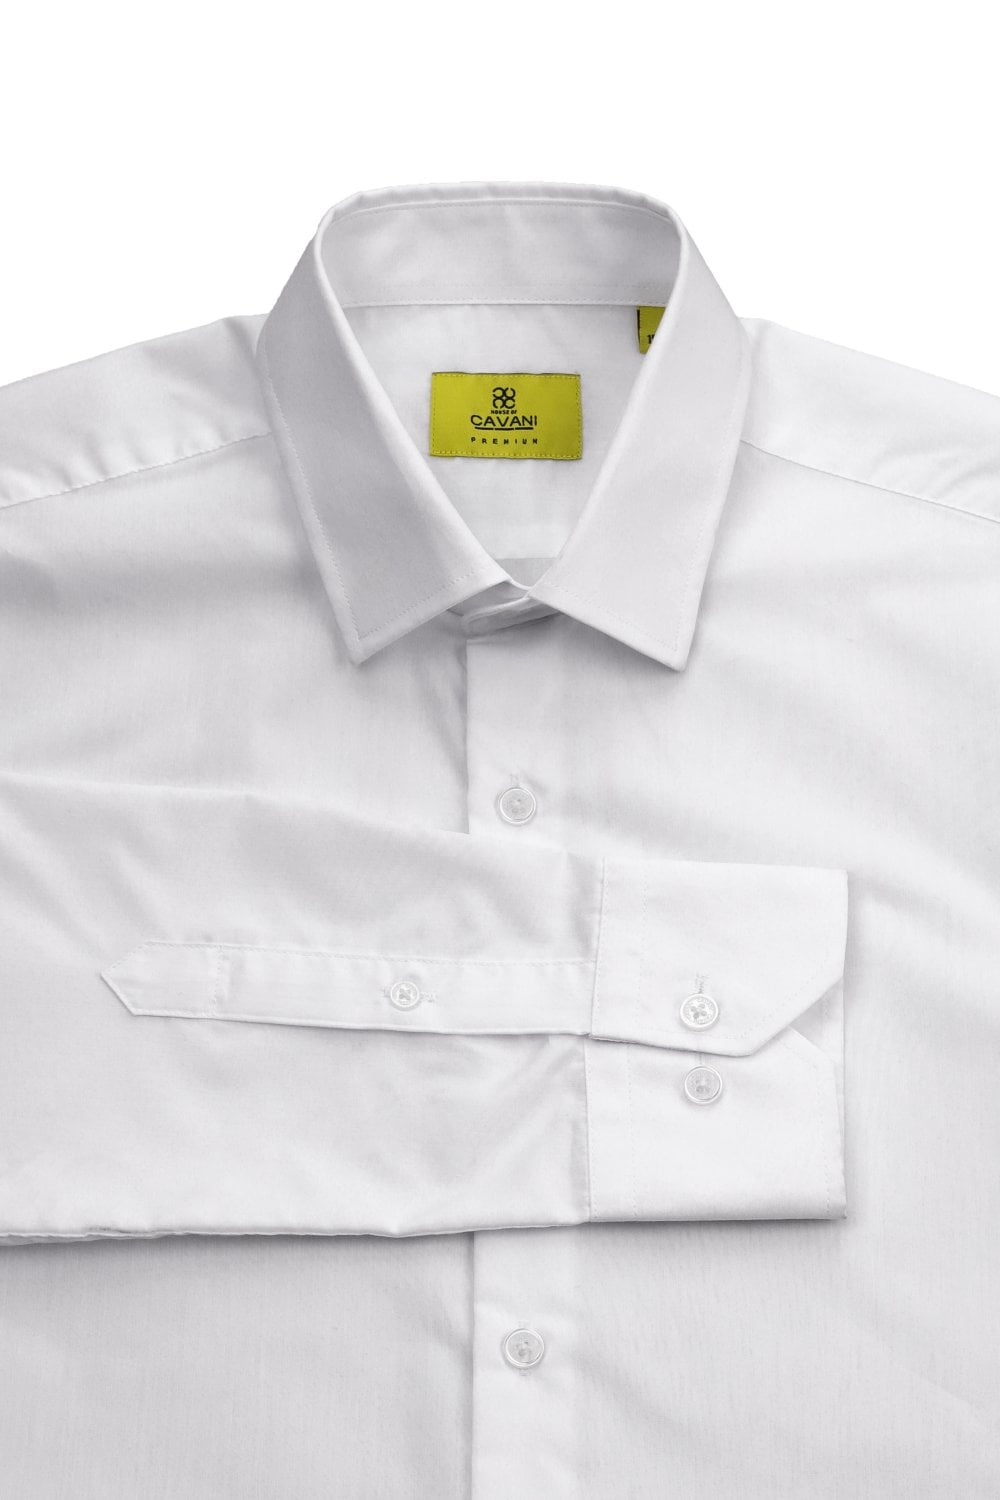 Miatti White Long Sleeve Shirt - OOS 28/7/23 - Shirts - 14.5" - THREADPEPPER